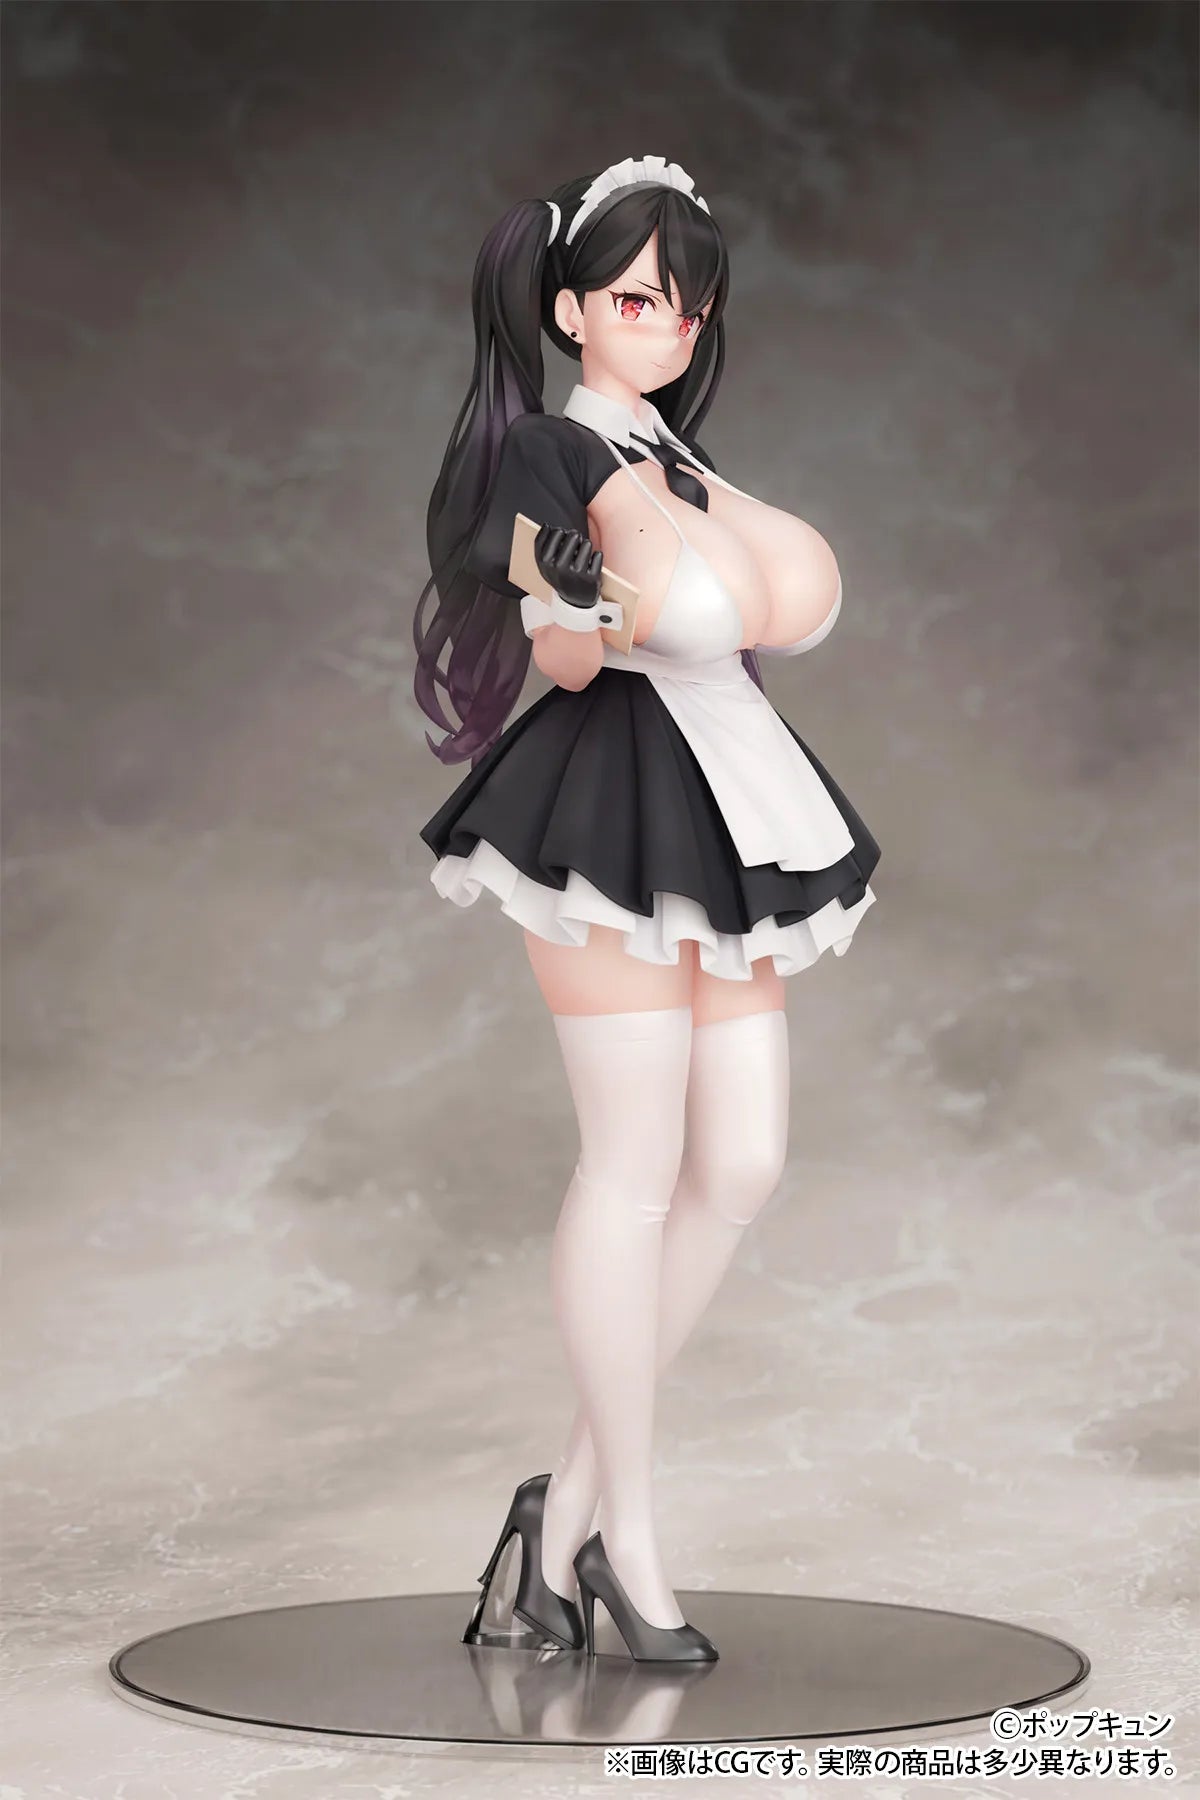 26cm NSFW Bfull Anime Figure Kou Jikyuu Maid Cafe Tenin-san Sexy Girl Action Figure Toy Adults Collection Hentai Model Doll Gift